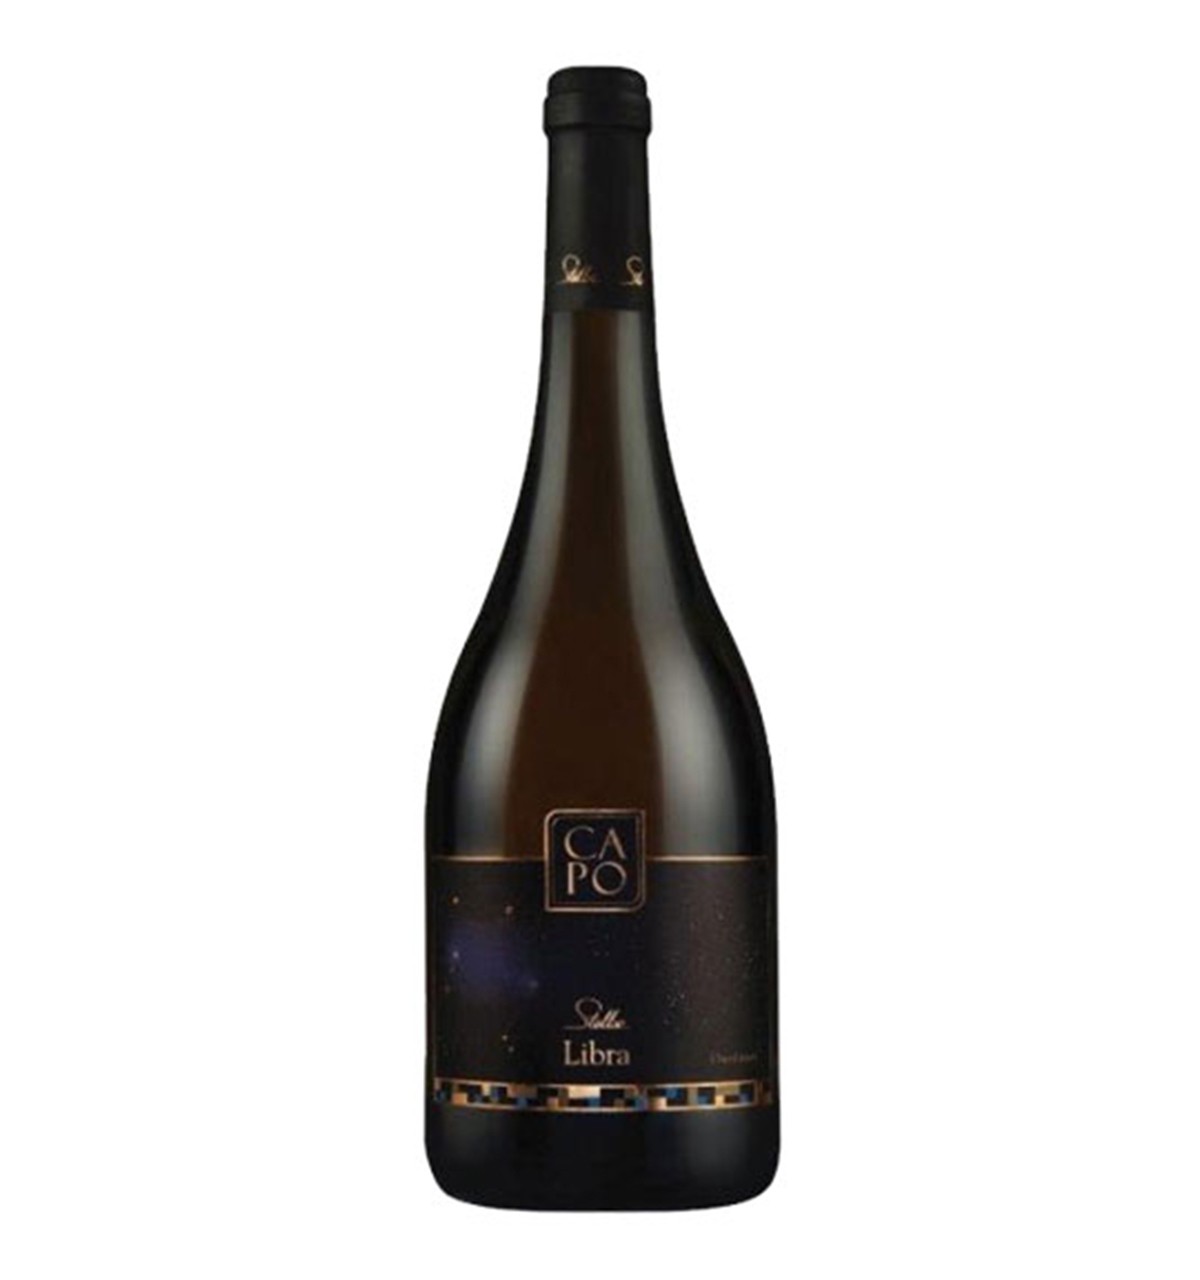 Libra-Chardonnay, Capo vina